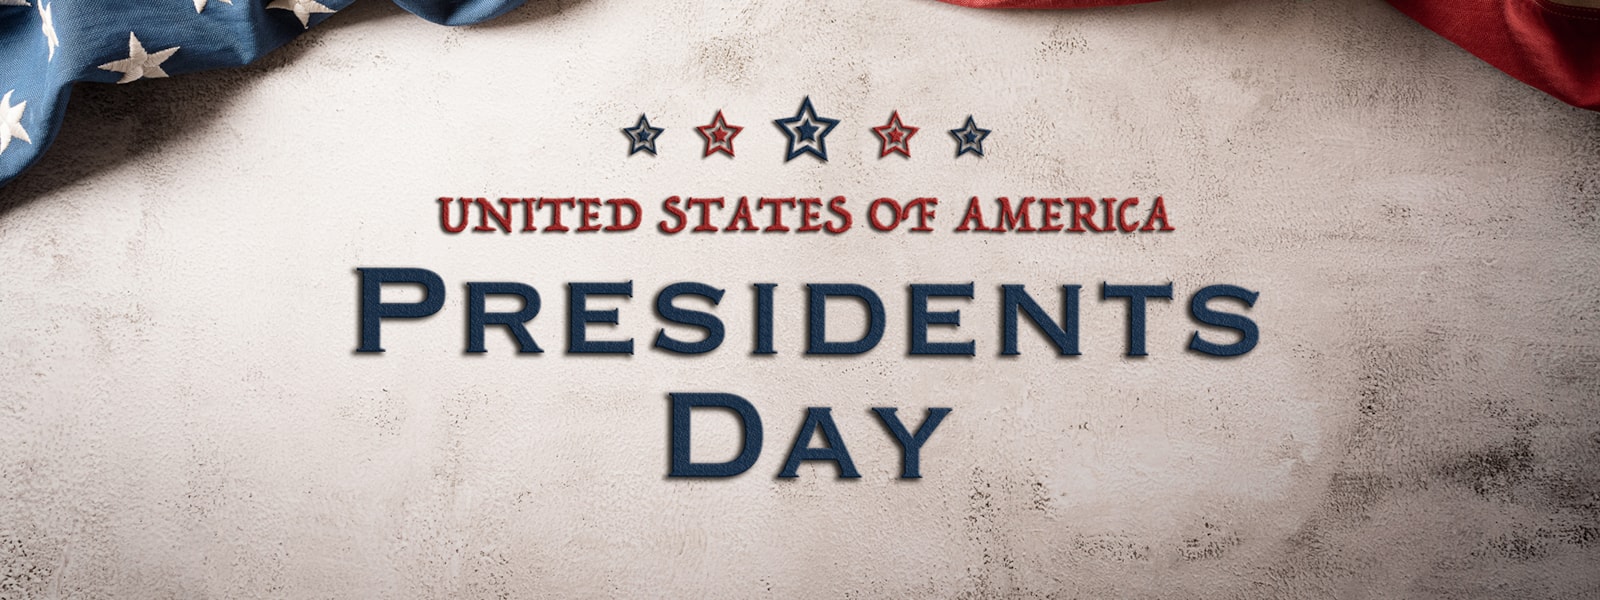 United States of America Presidents Day & Flag